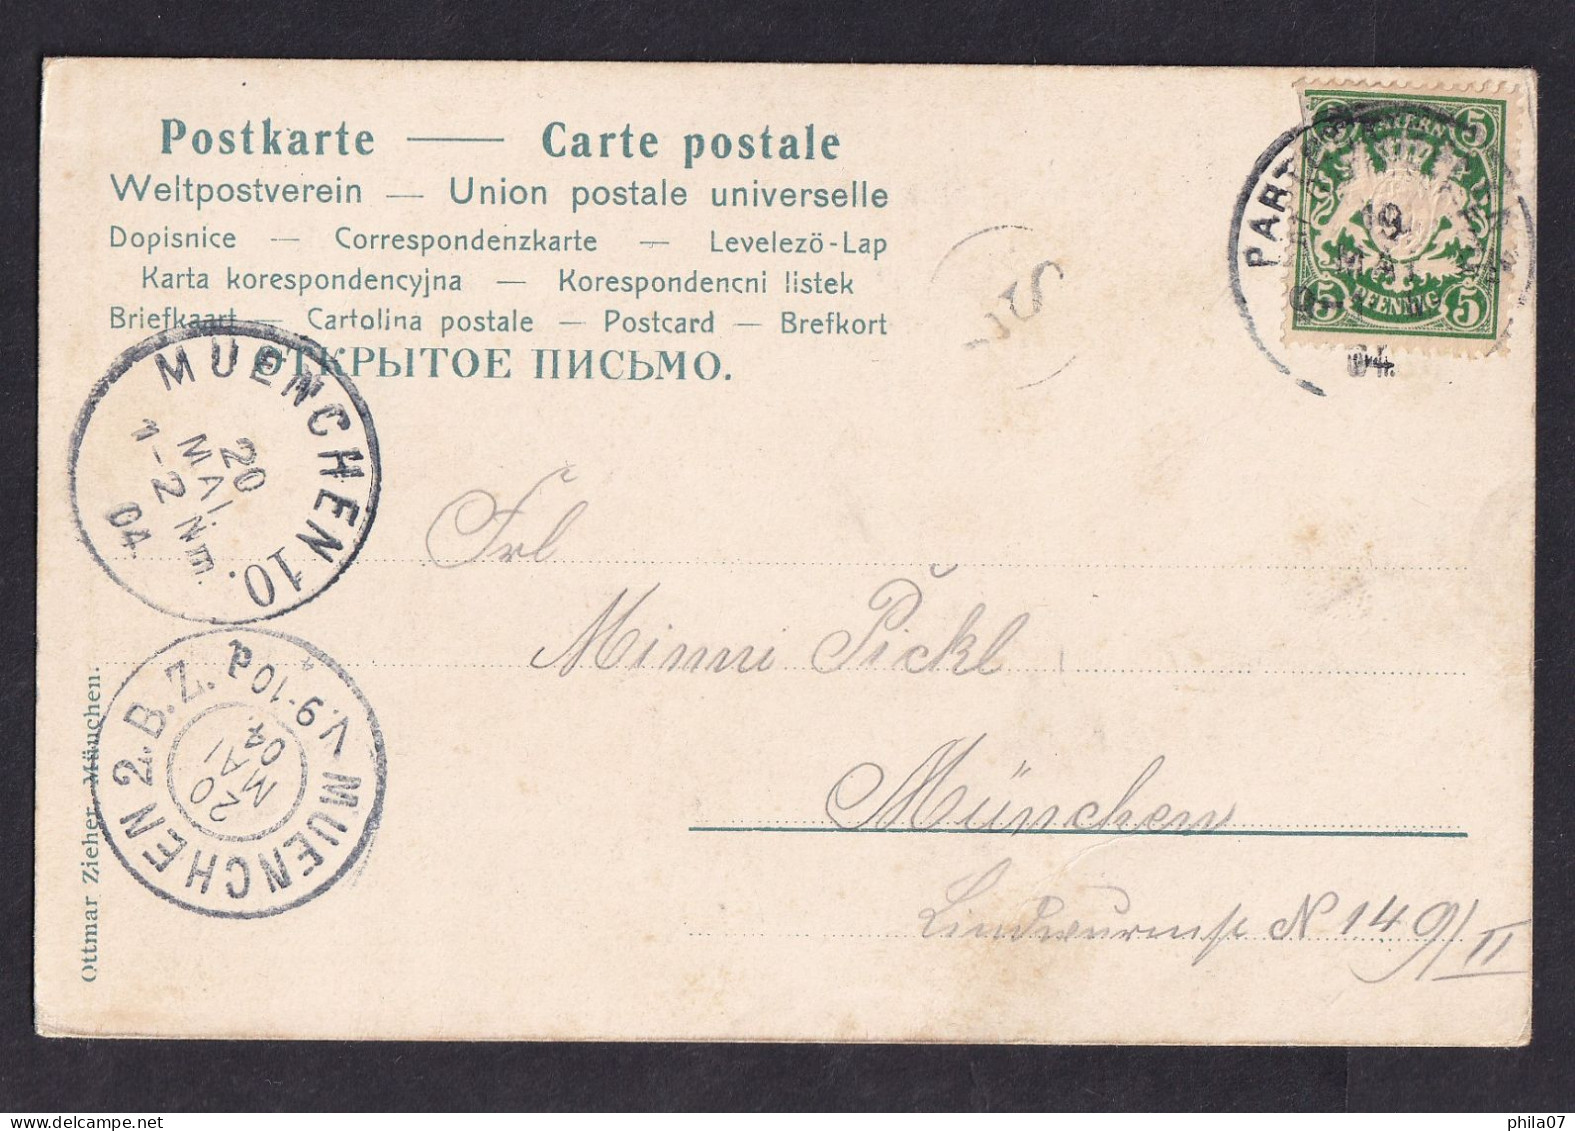 Hollea Juhe! Herob'n Auf Der Hoh! Hollara Juhe! ... / Year 1904/ Long Line Postcard Circulated, 2 Scans - Altri & Non Classificati